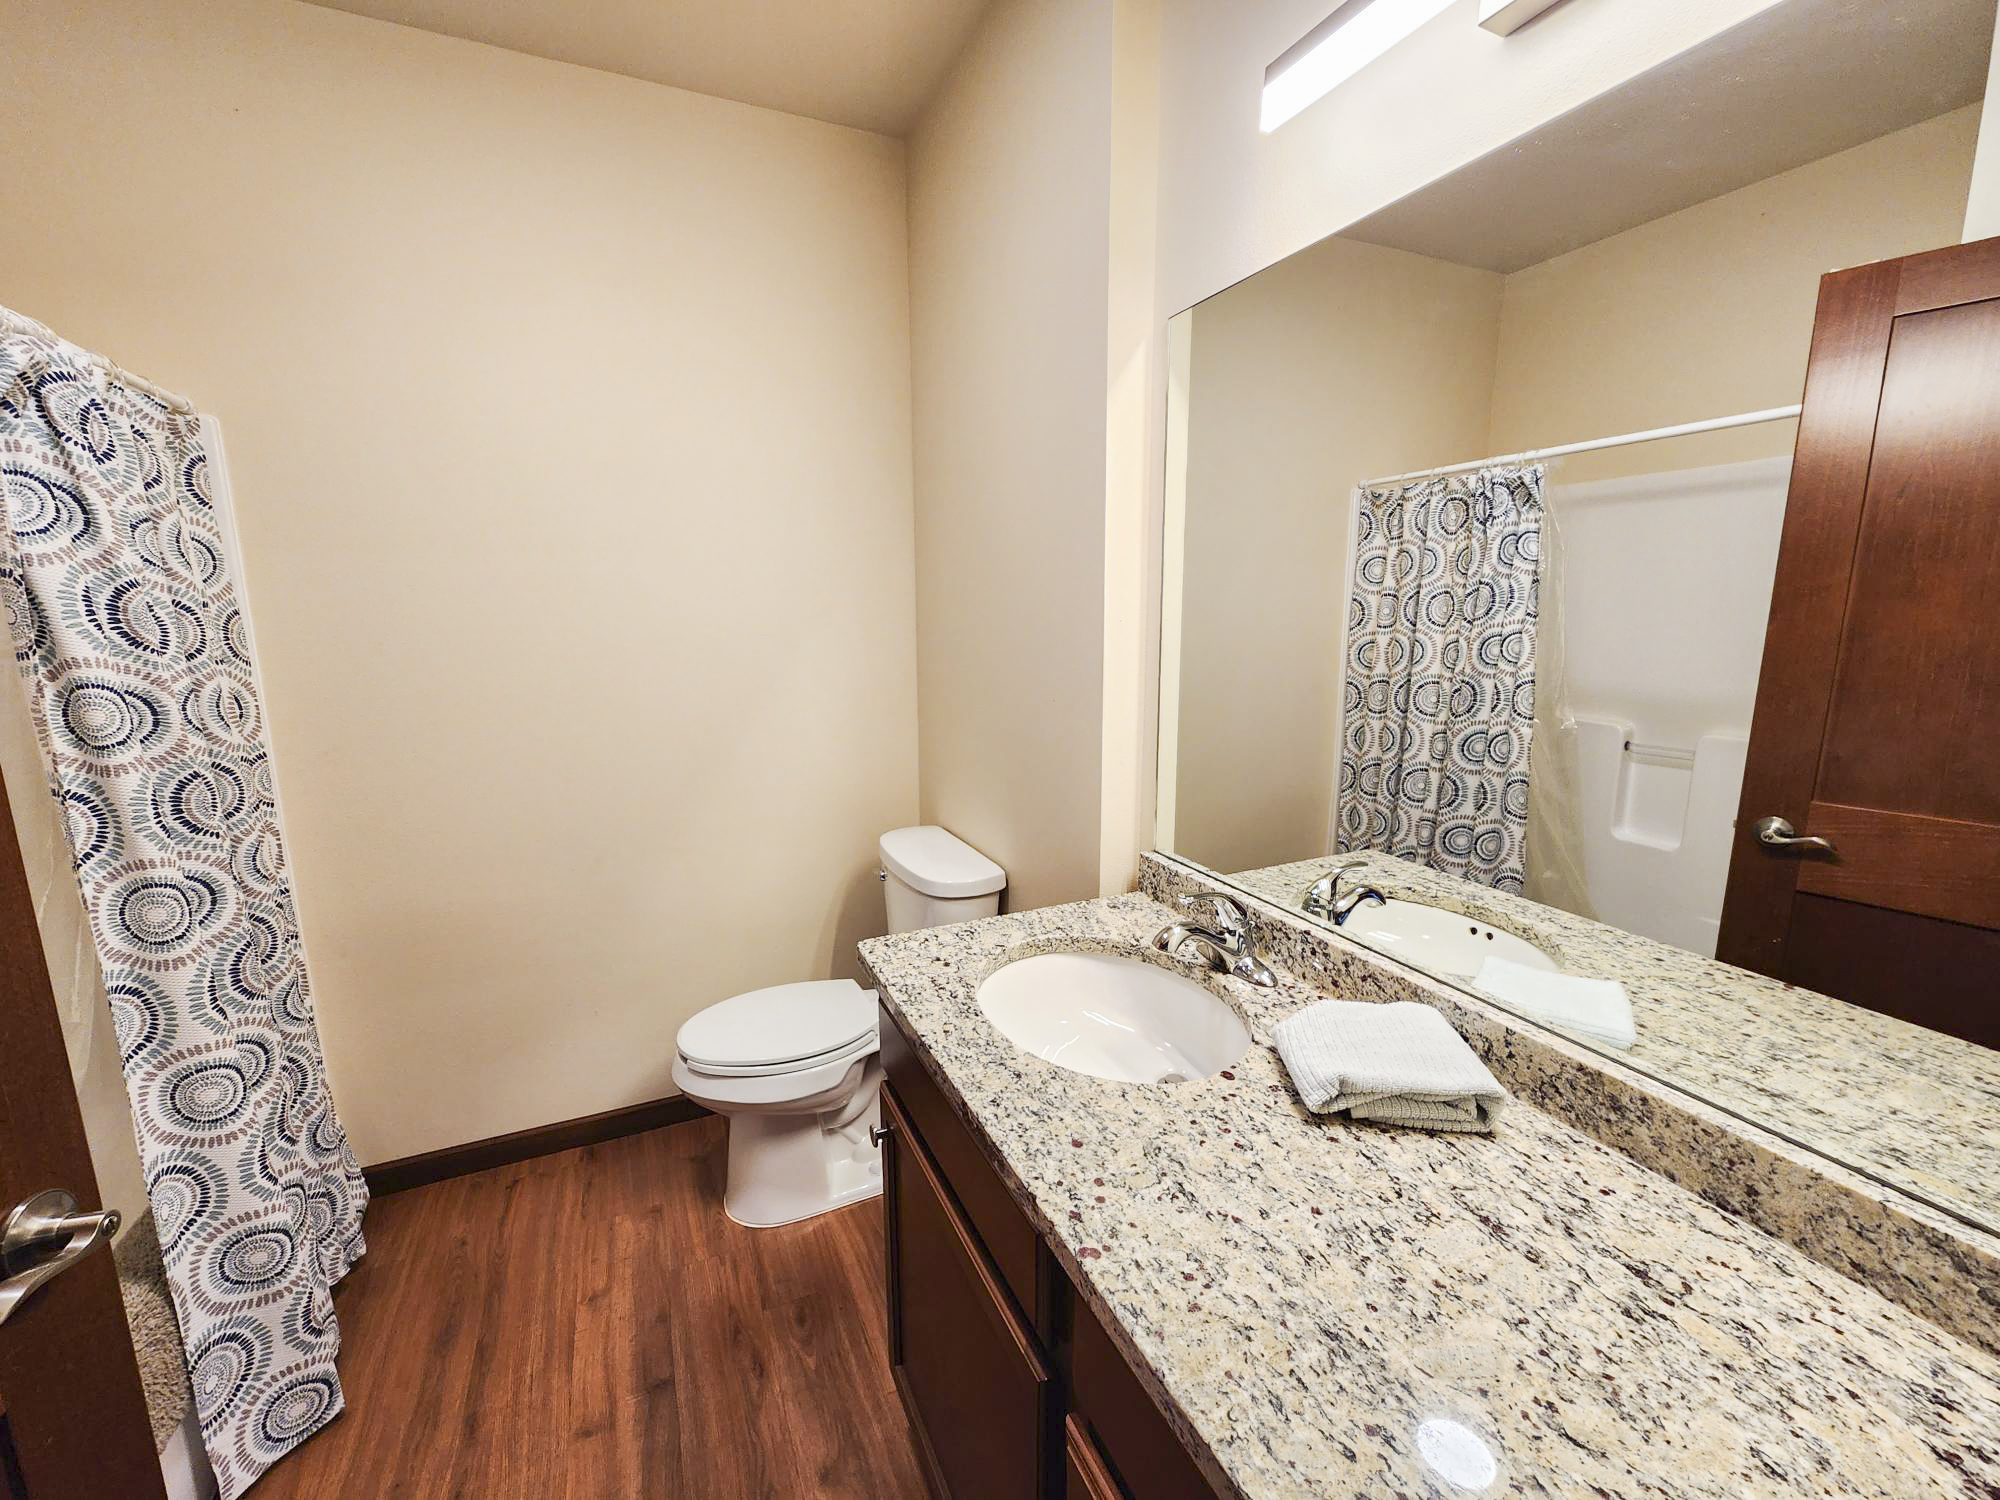 KC Lofts apartment listing - bathroom